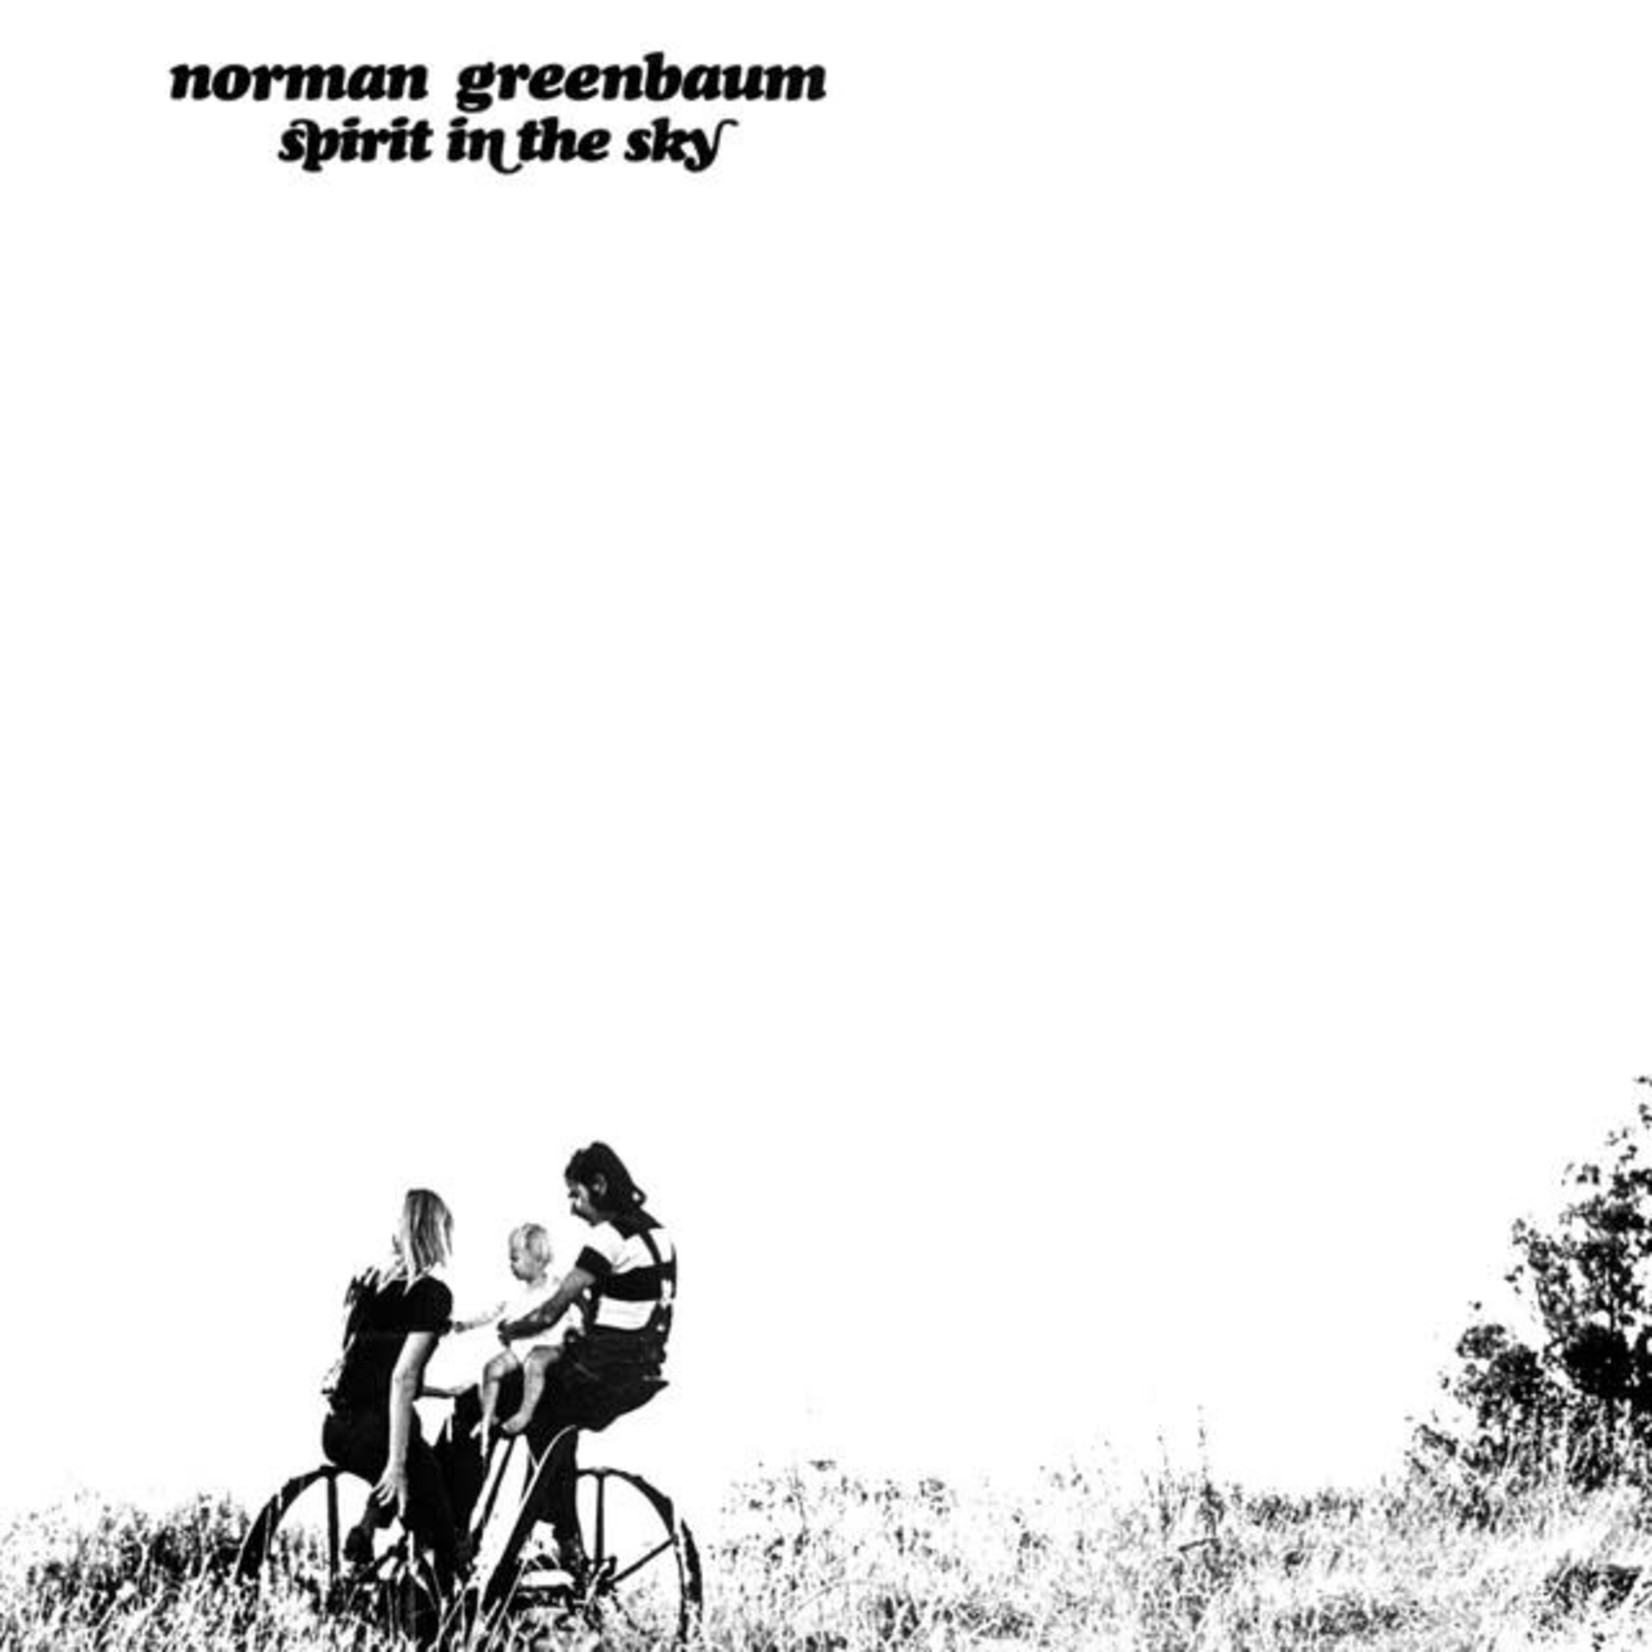 [Vintage] Norman Greenbaum - Spirit in the Sky